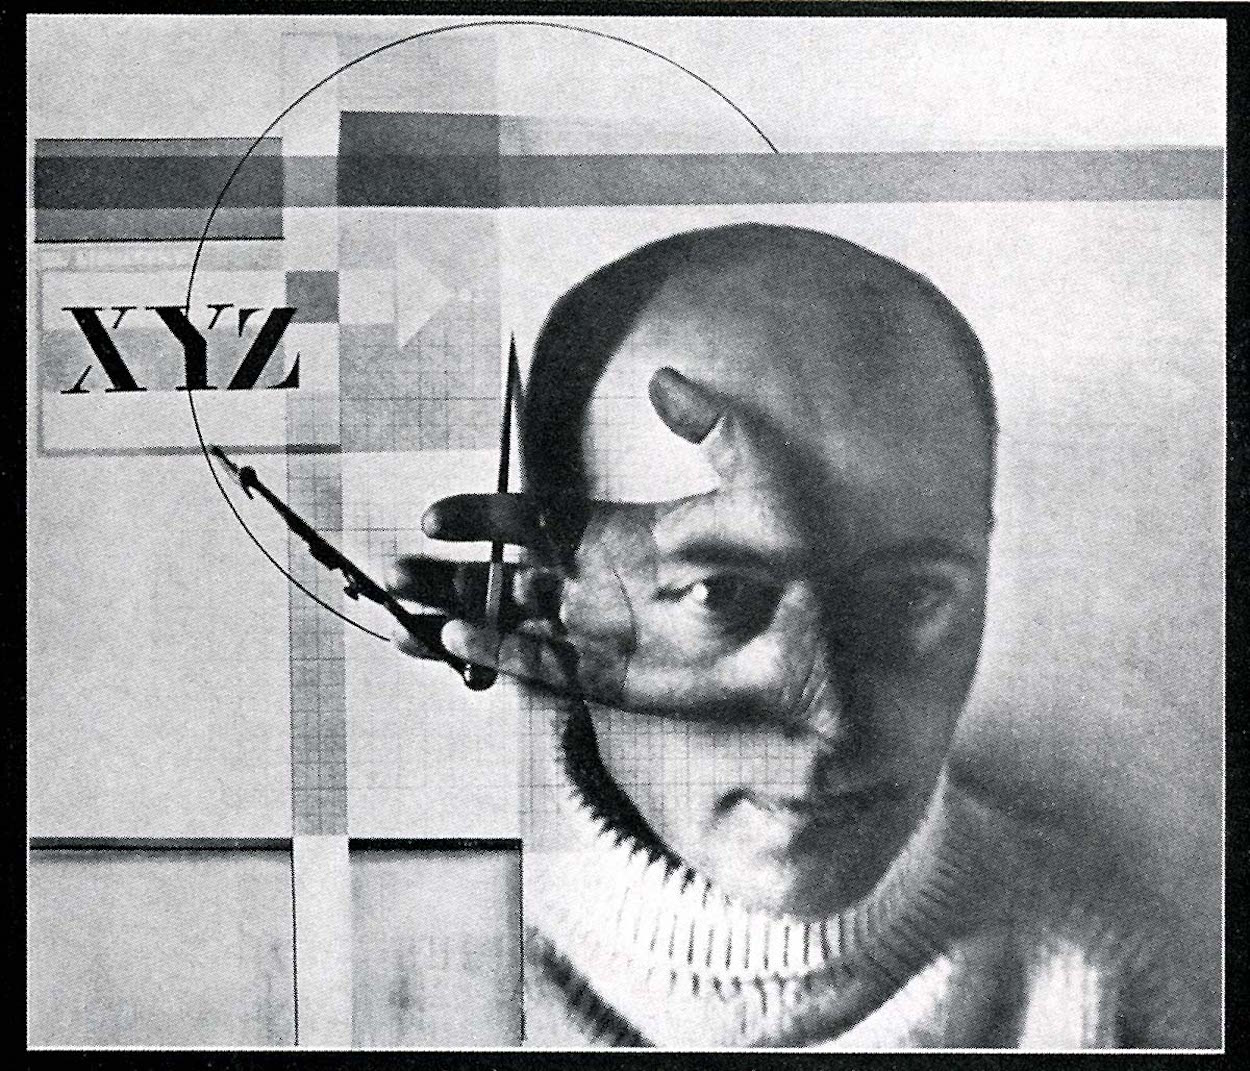 El Lissitzky - 23 november 1890 - 30 december 1941